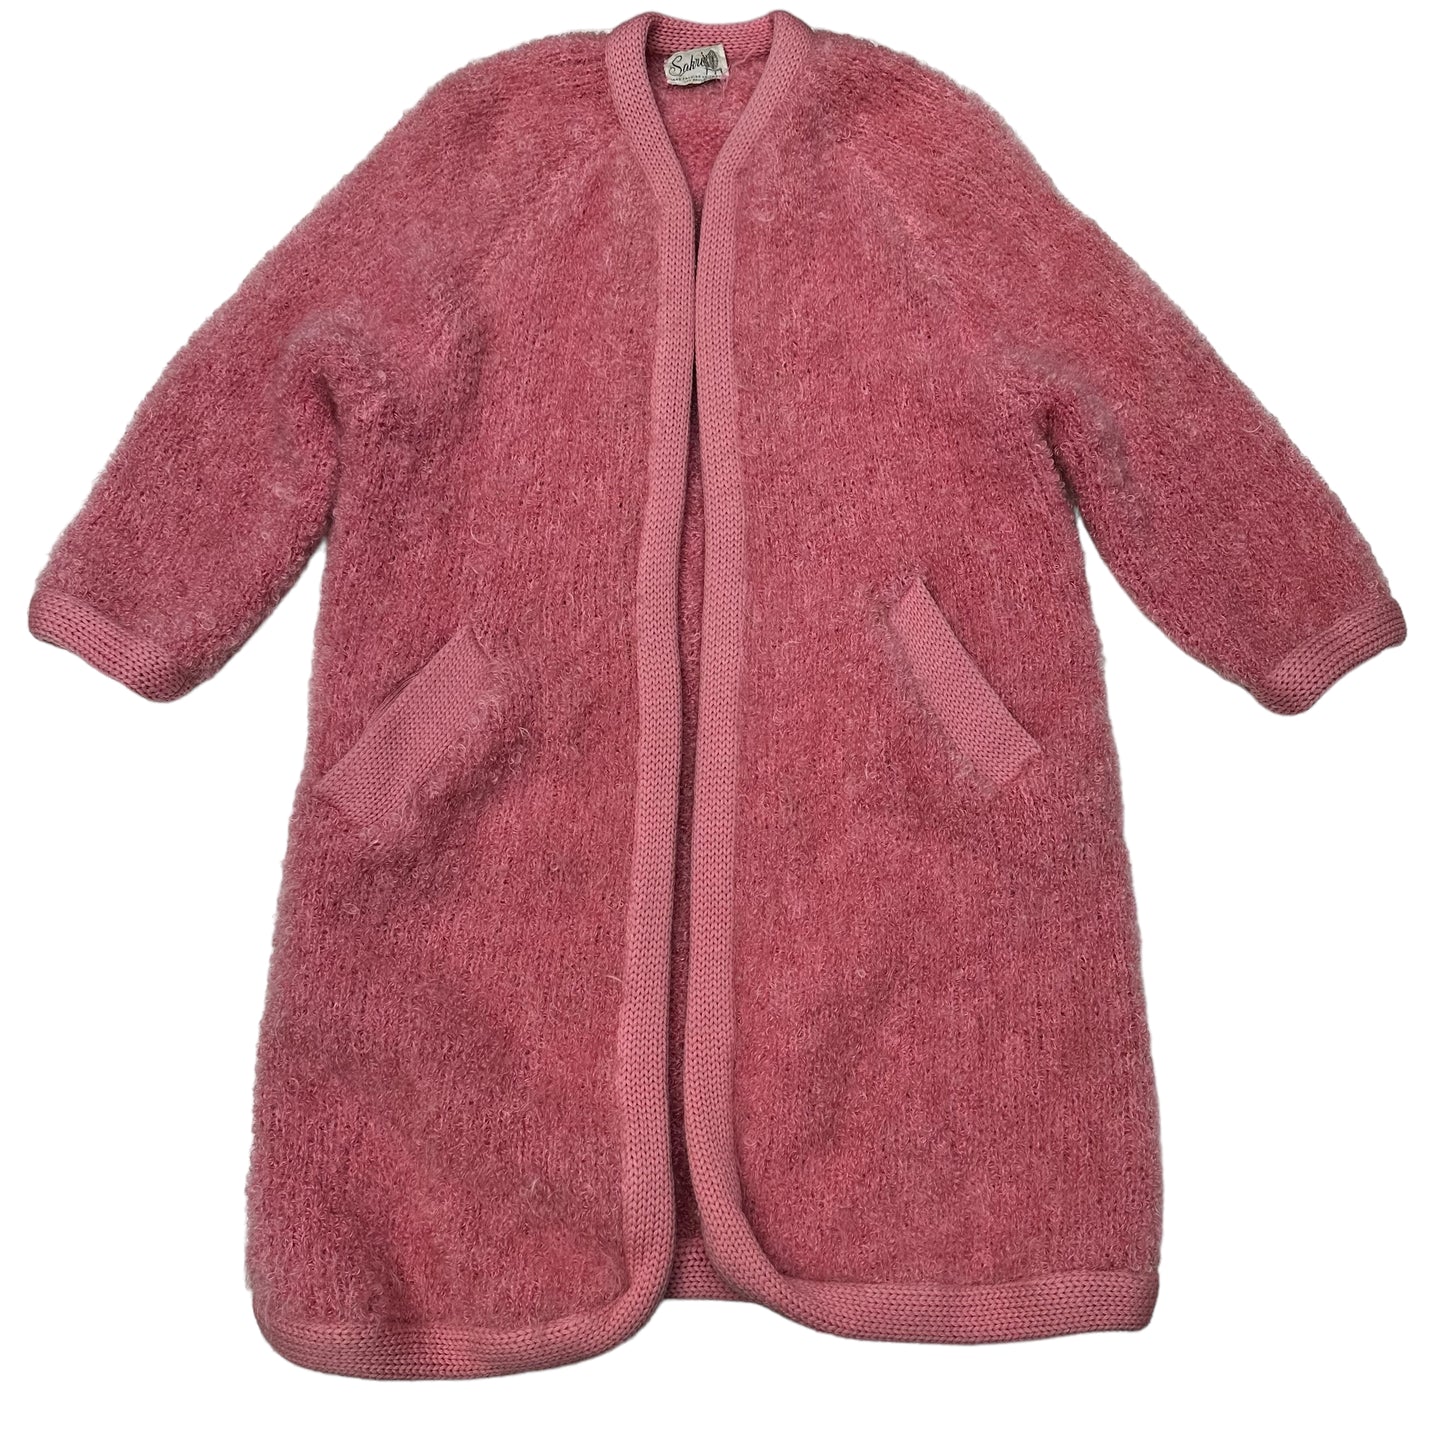 Vintage Pink Fuzzy Cardigan - S/M